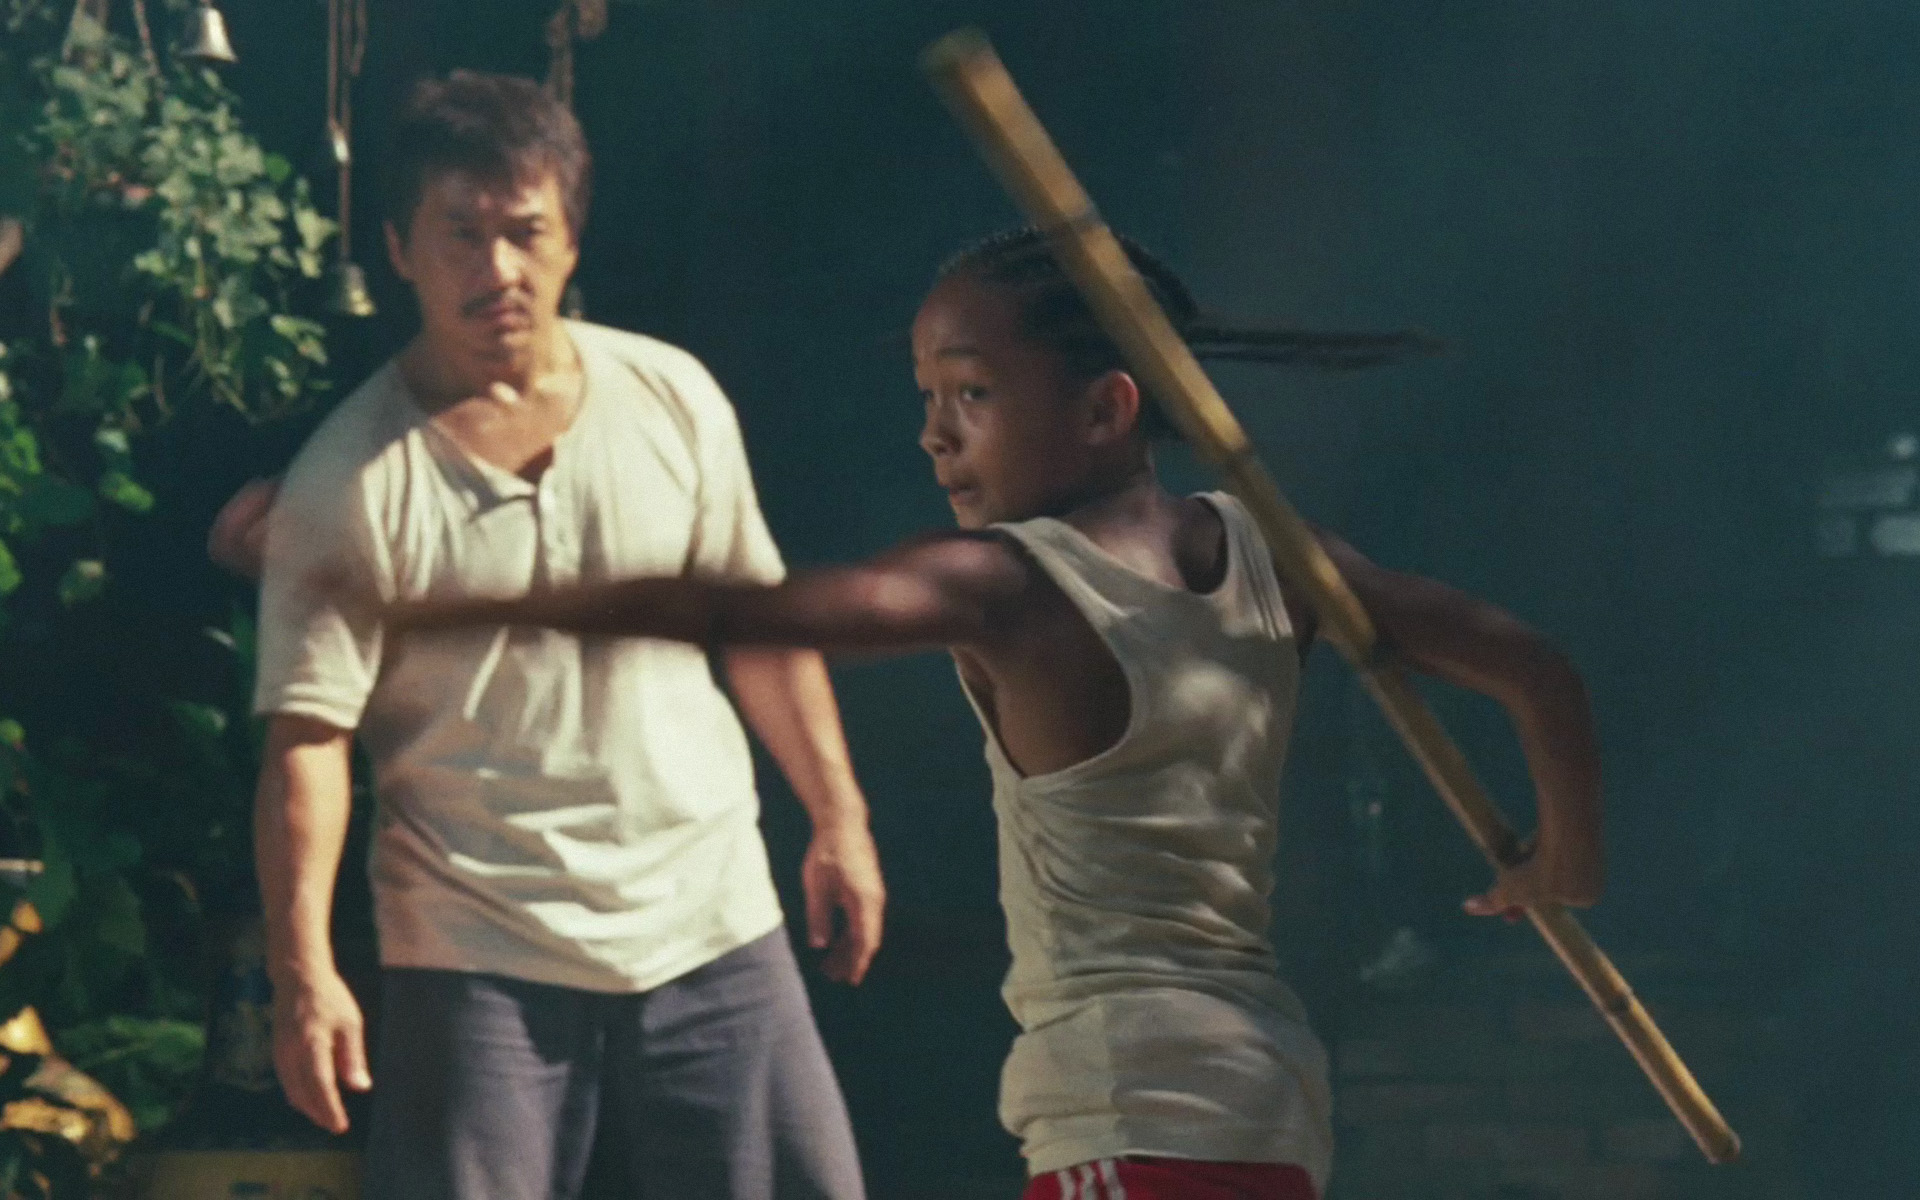 The Karate Kid (2010) Wallpapers